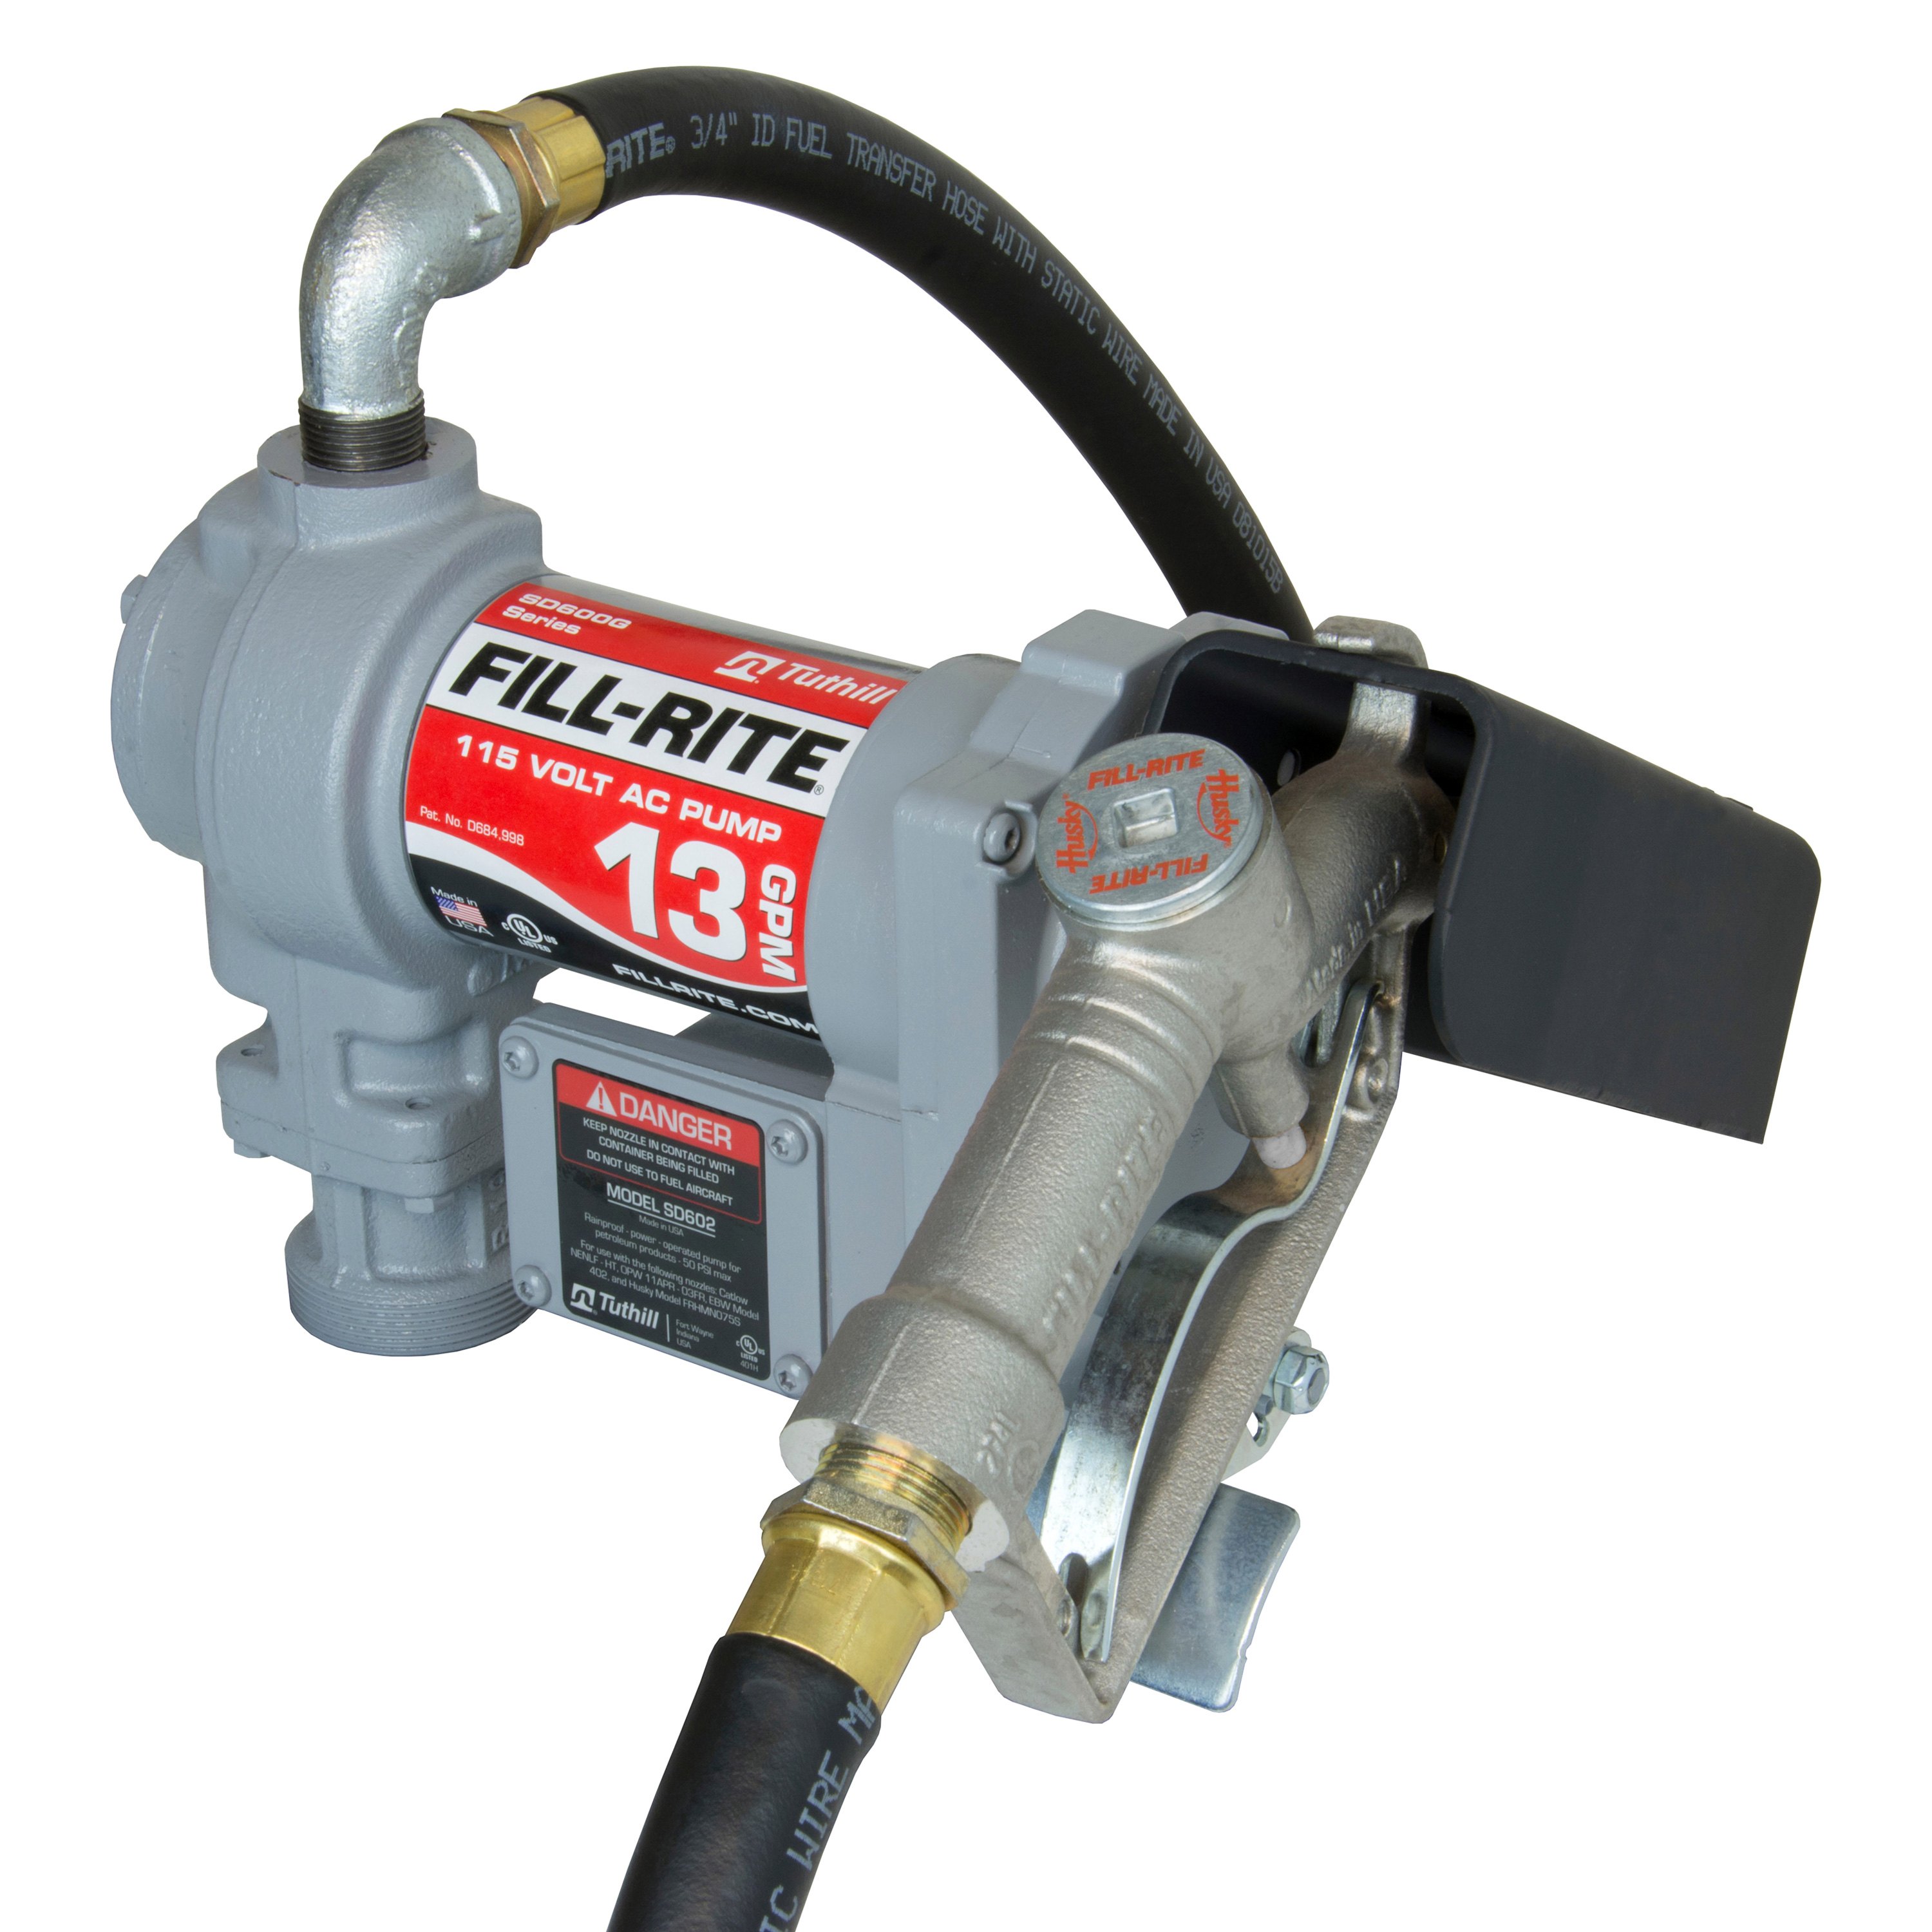 hortex hose sprayer instructions